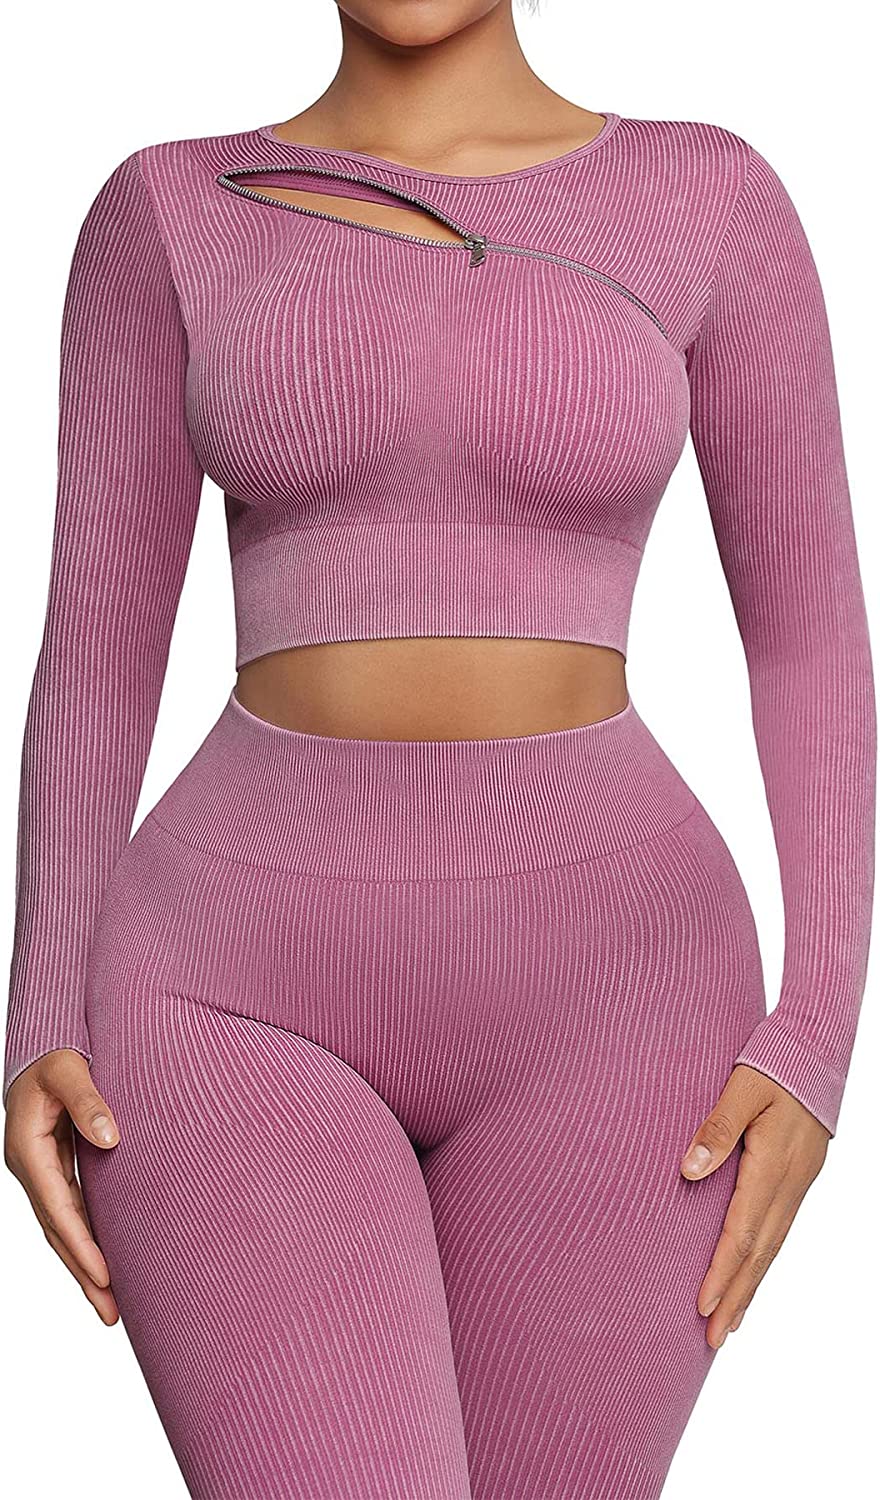 Buy FeelinGirl Women Gym Clothes Athletic Set Seamless Yoga Outfits 2 Piece  Set, Yellowk, Medium at